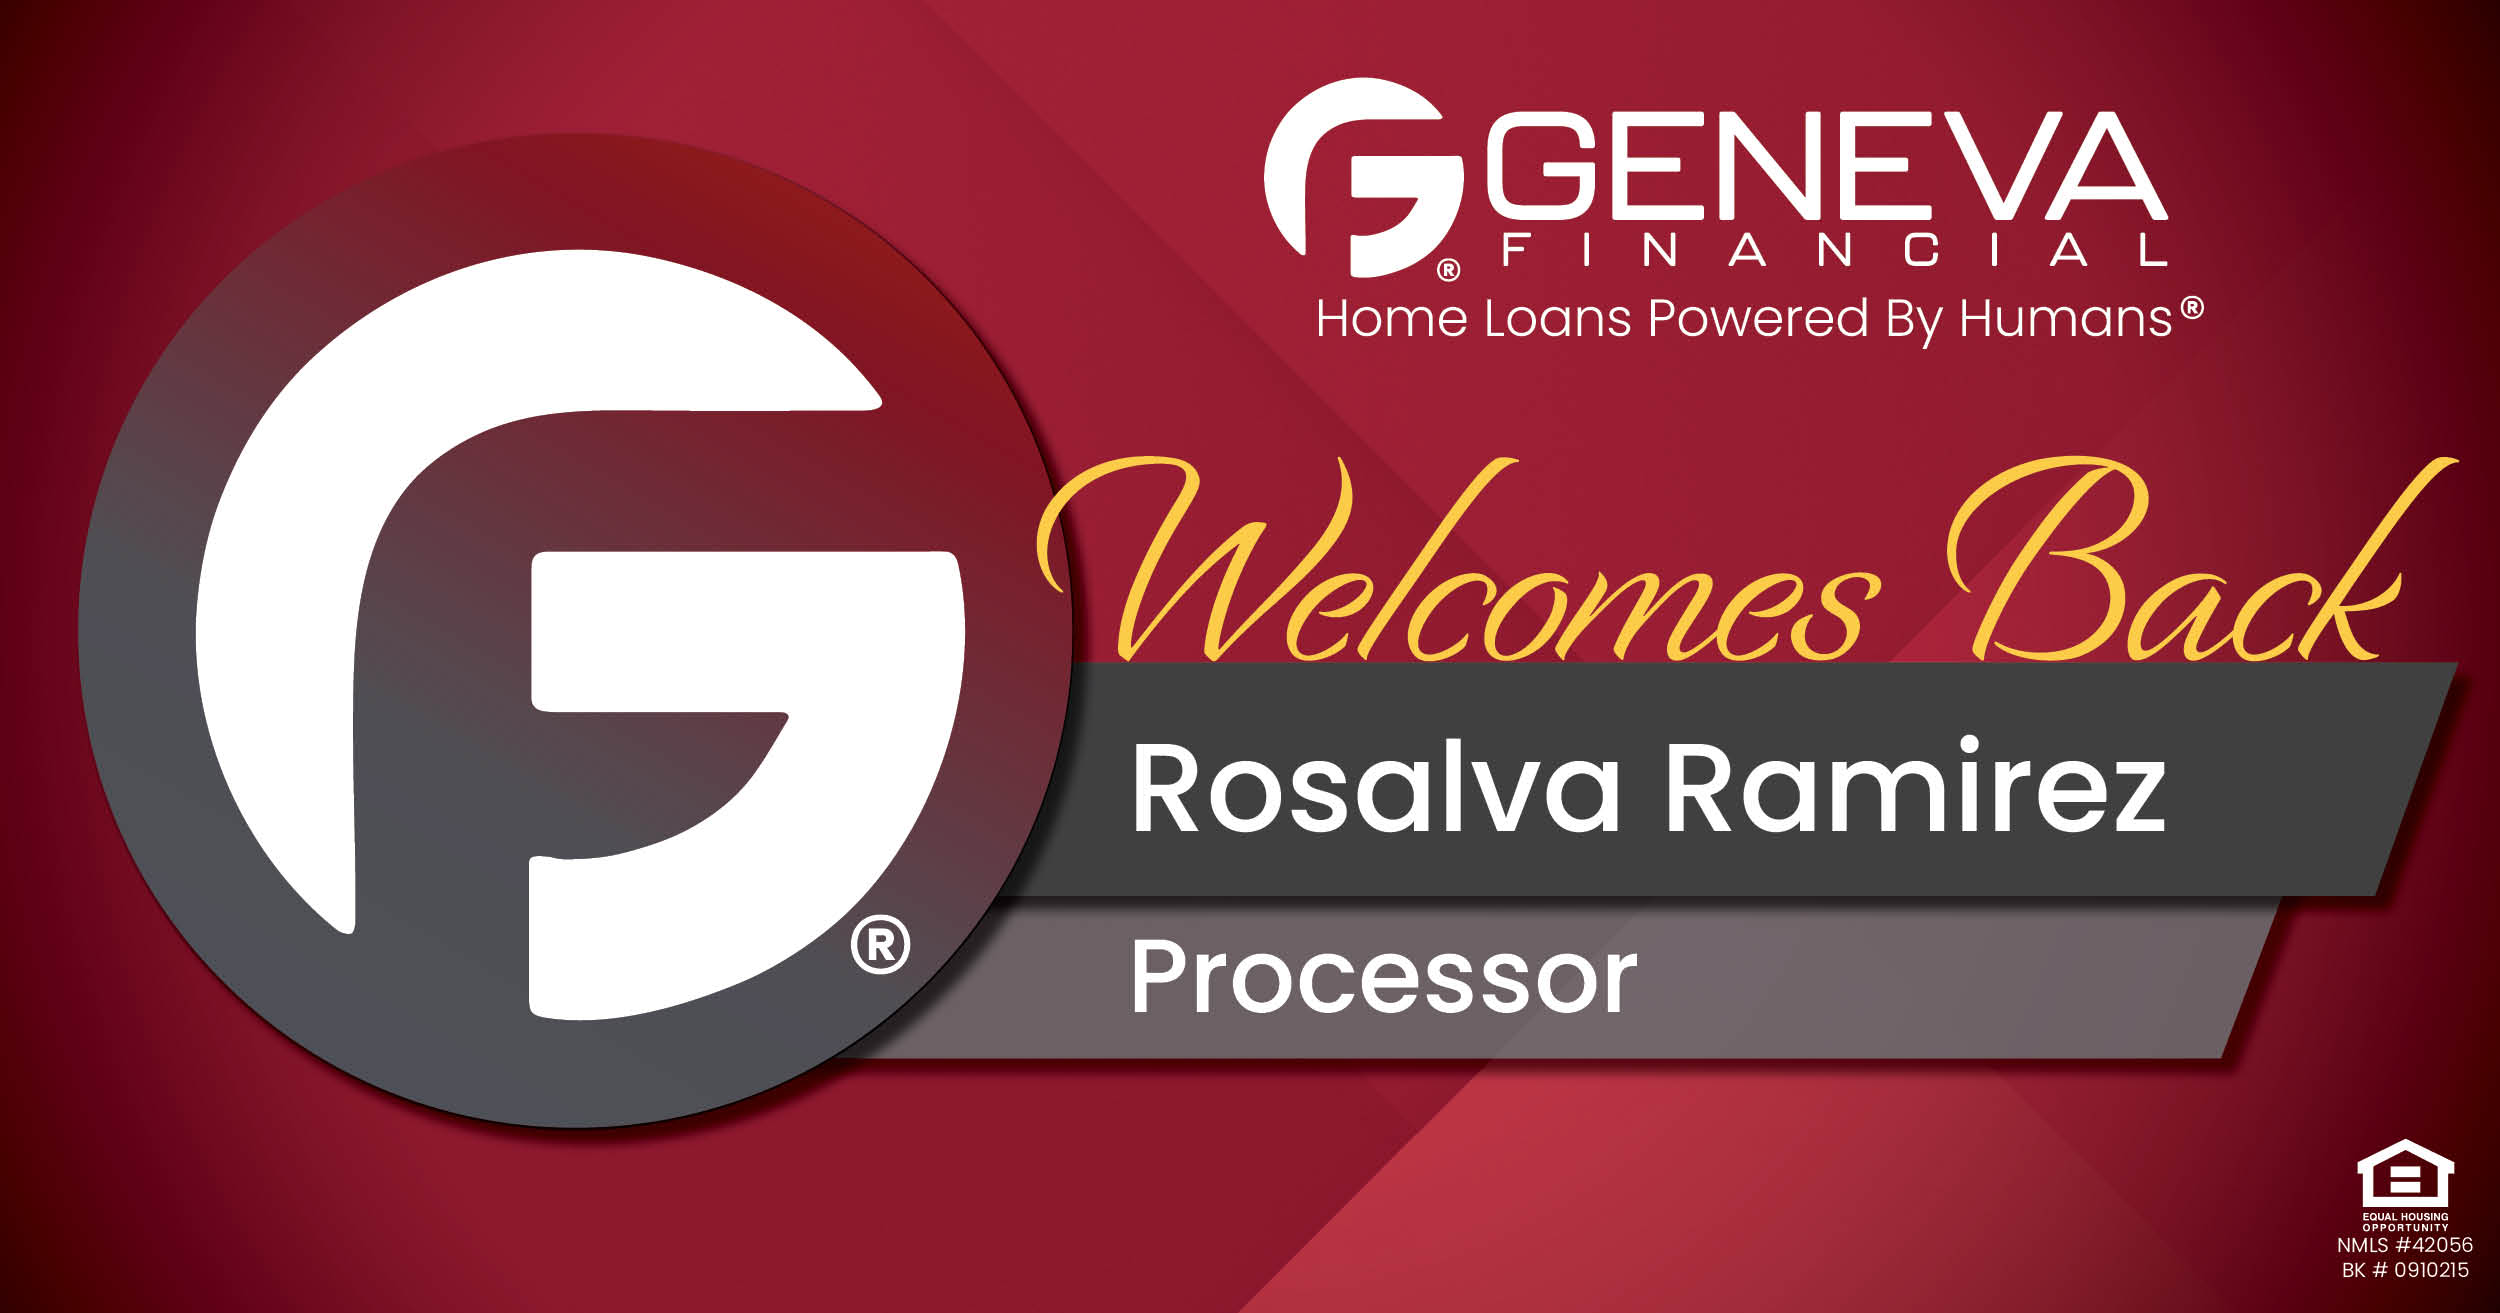 Geneva Financial Welcomes Back Processor Rosalva Ramirez to Yuma, AZ – Home Loans Powered by Humans®.